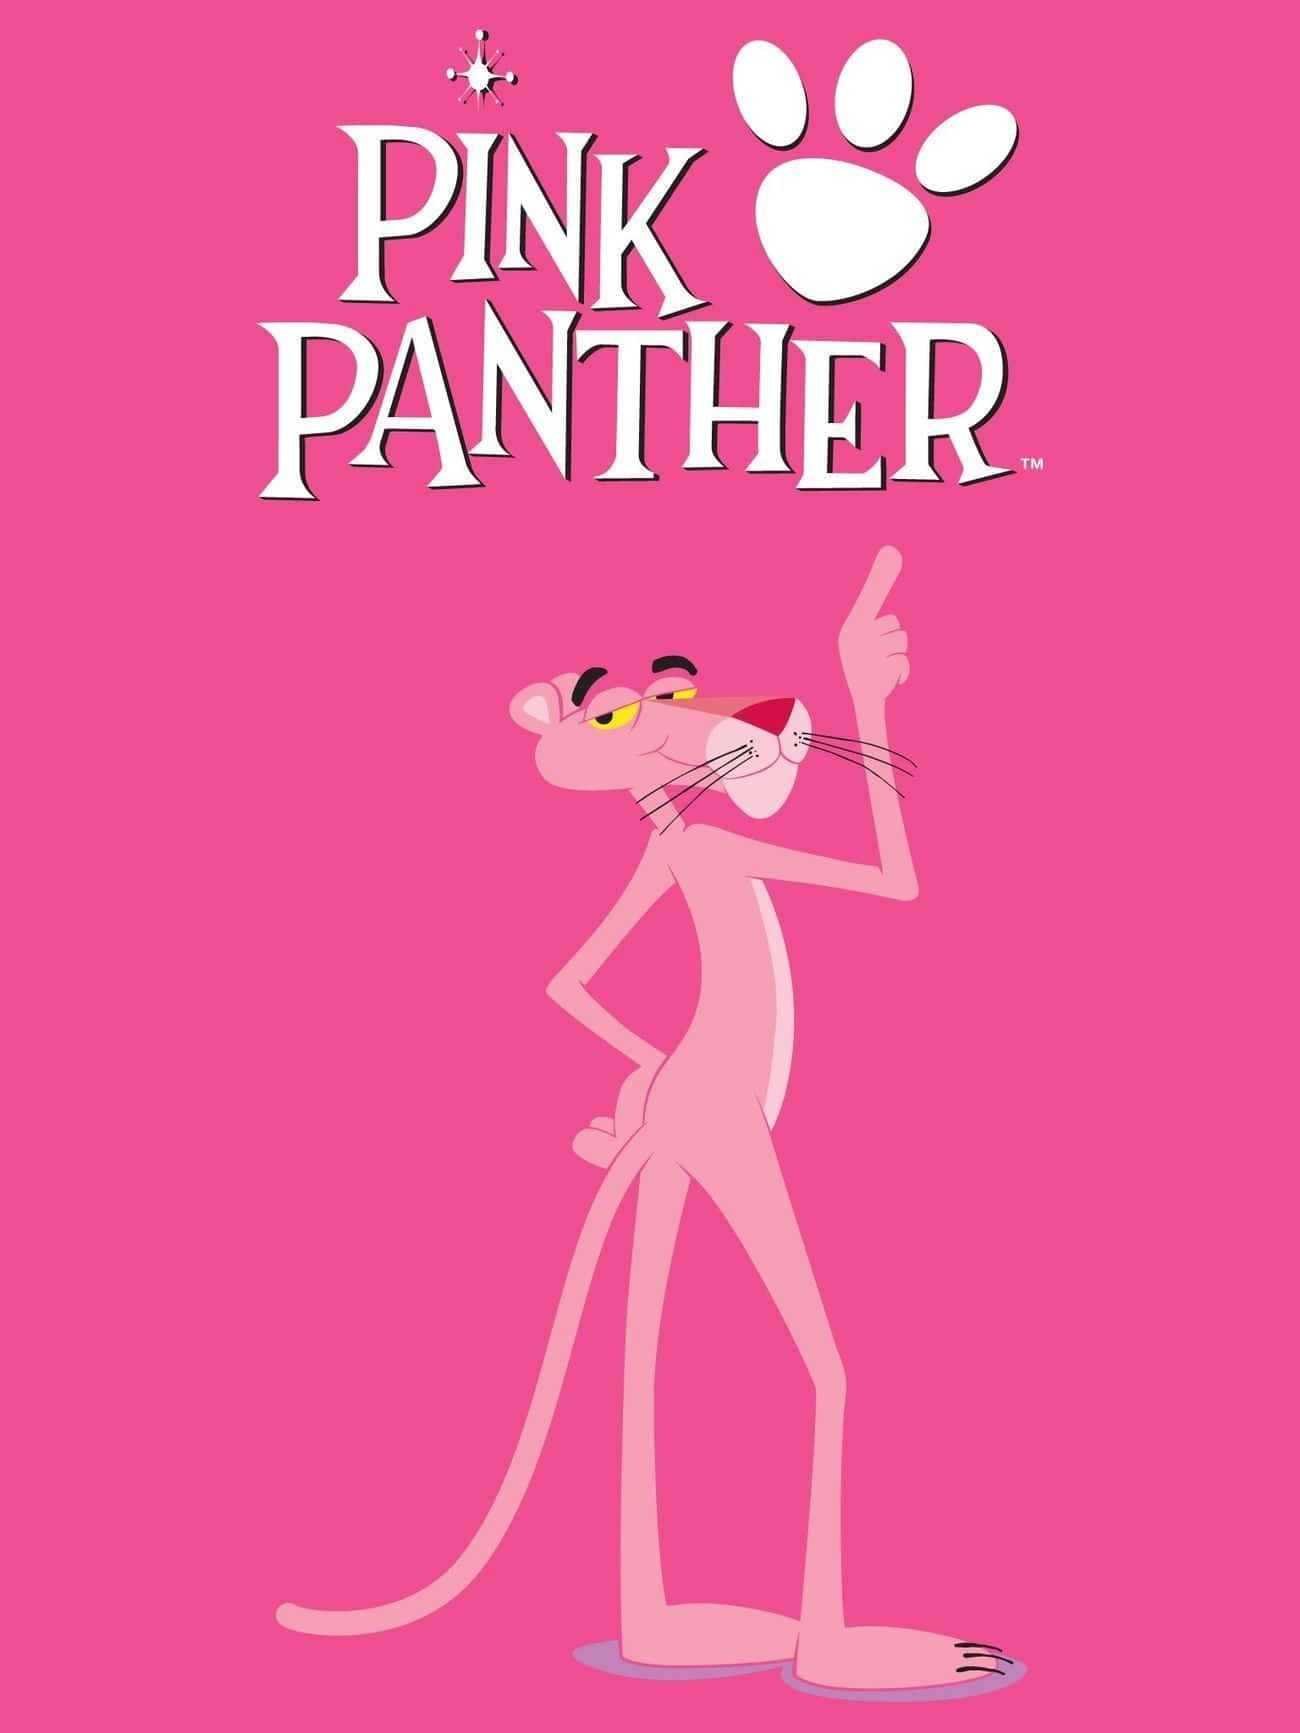 Pink Panther Classic Pose Wallpaper